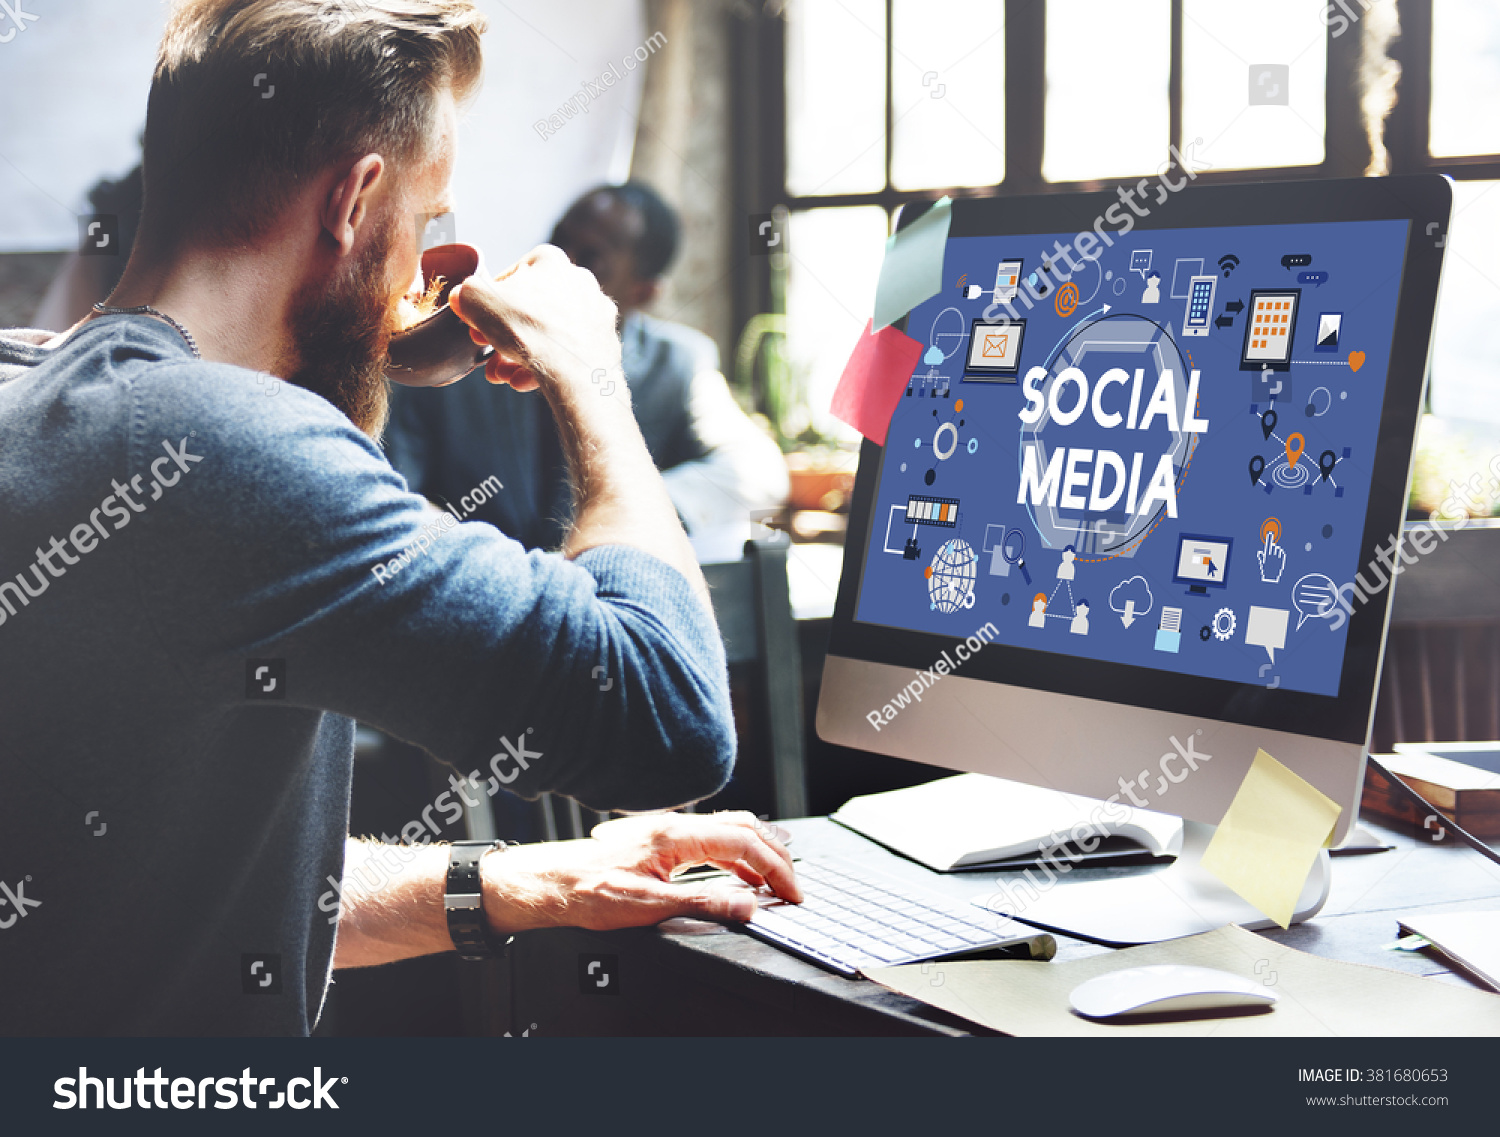 Social Media Social Networking Technology Innovation Concept #381680653